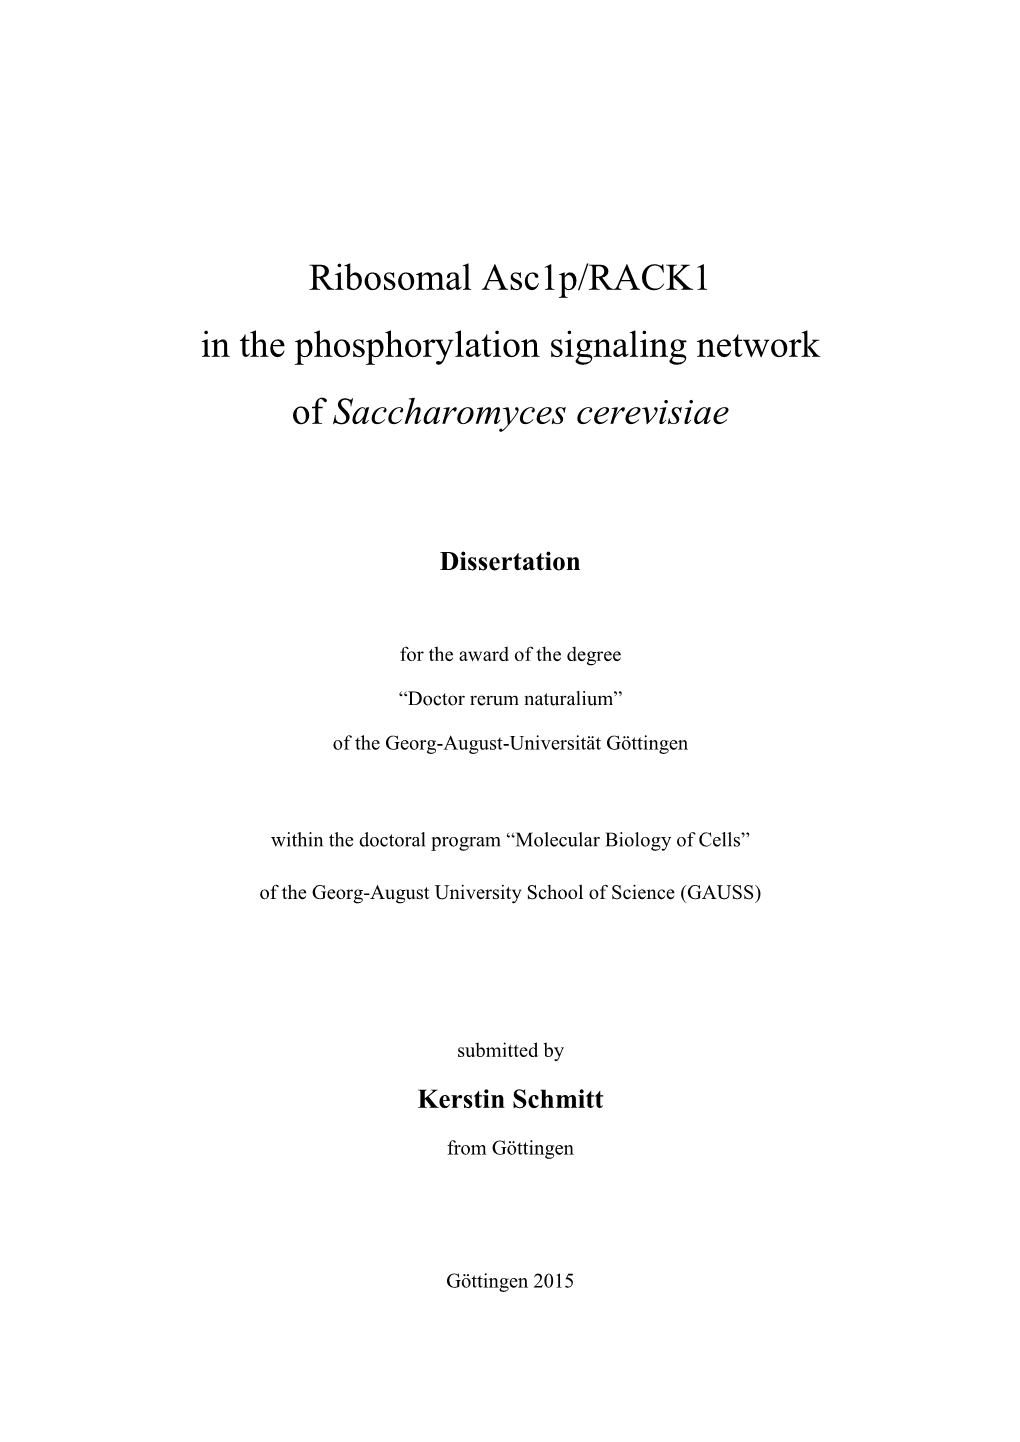 Ribosomal Asc1p/RACK1 in the Phosphorylation Signaling Network of Saccharomyces Cerevisiae